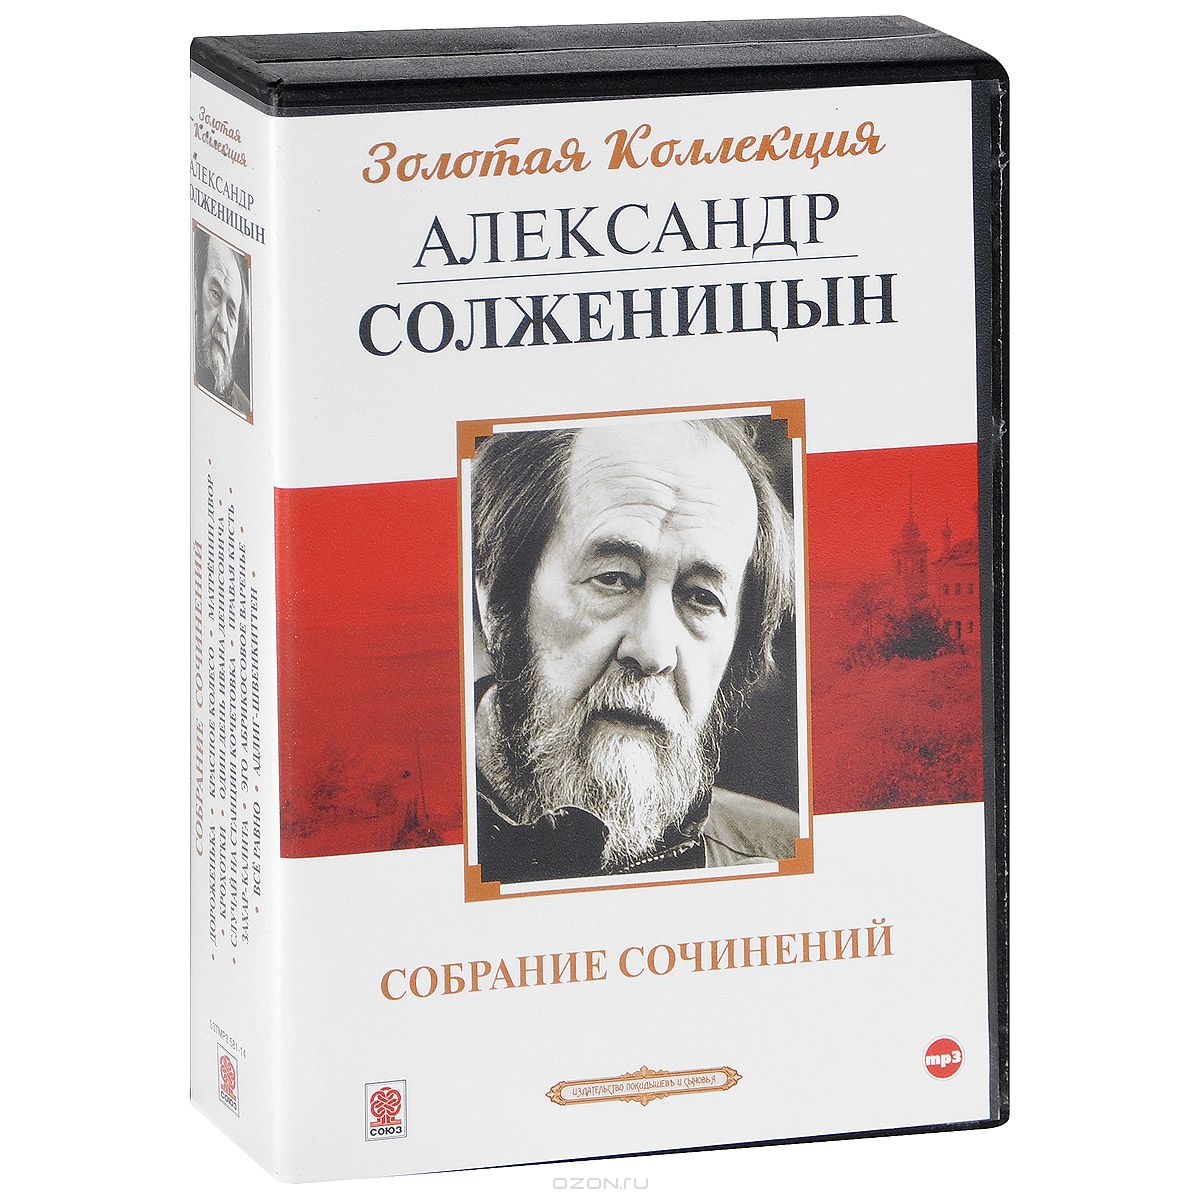 Солженицын герои произведений. Книги Солженицына. Обложки книг Солженицына.